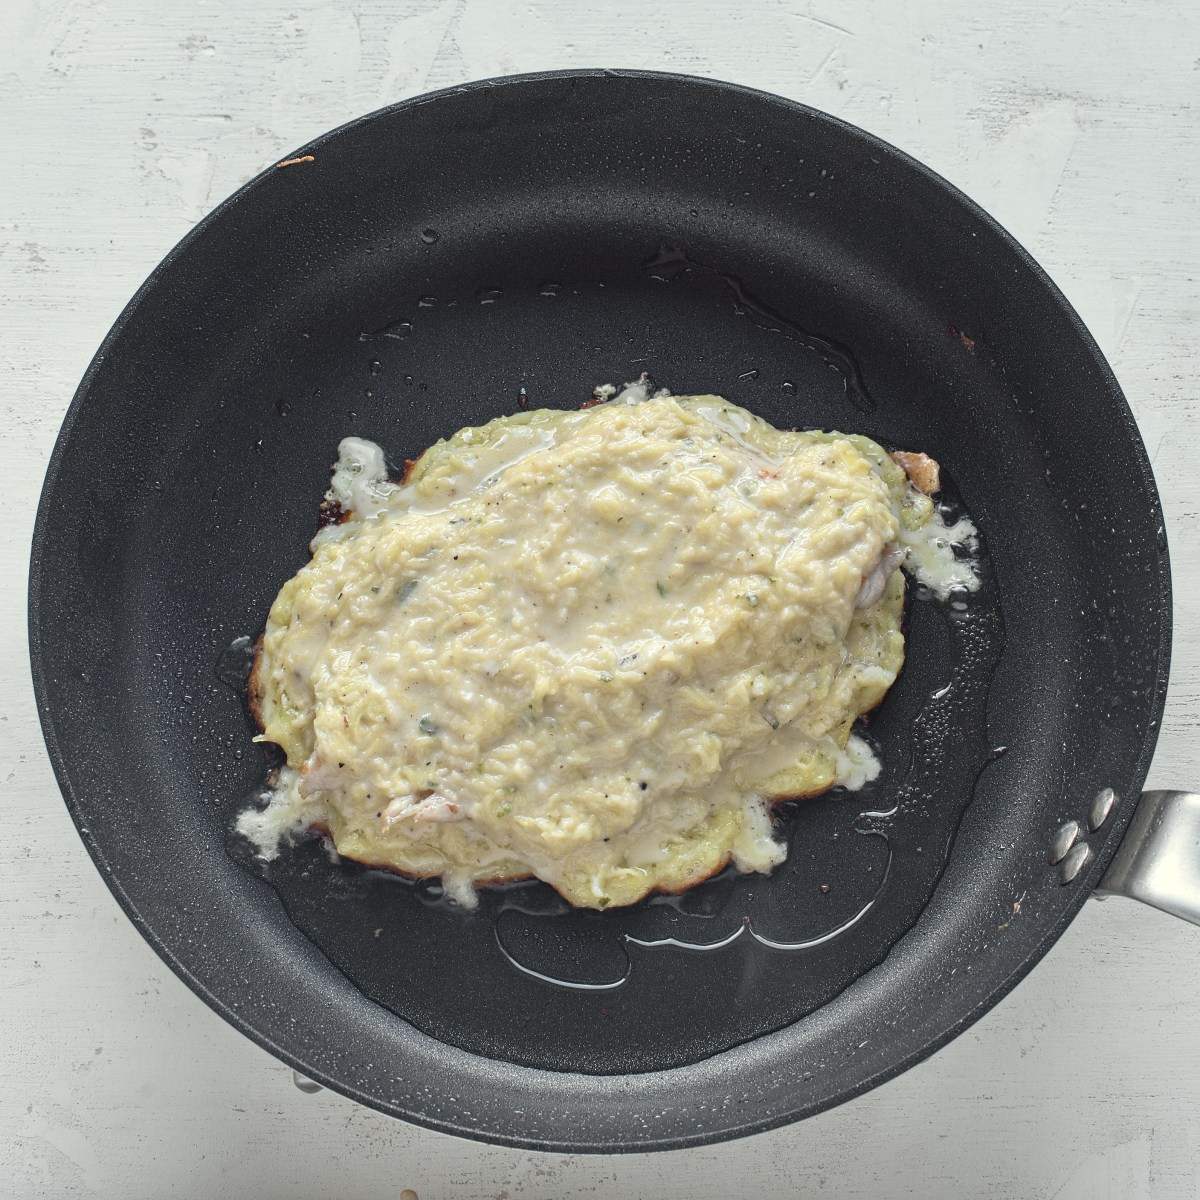 Potato pancake with chicken breast steak is frying in a pan.